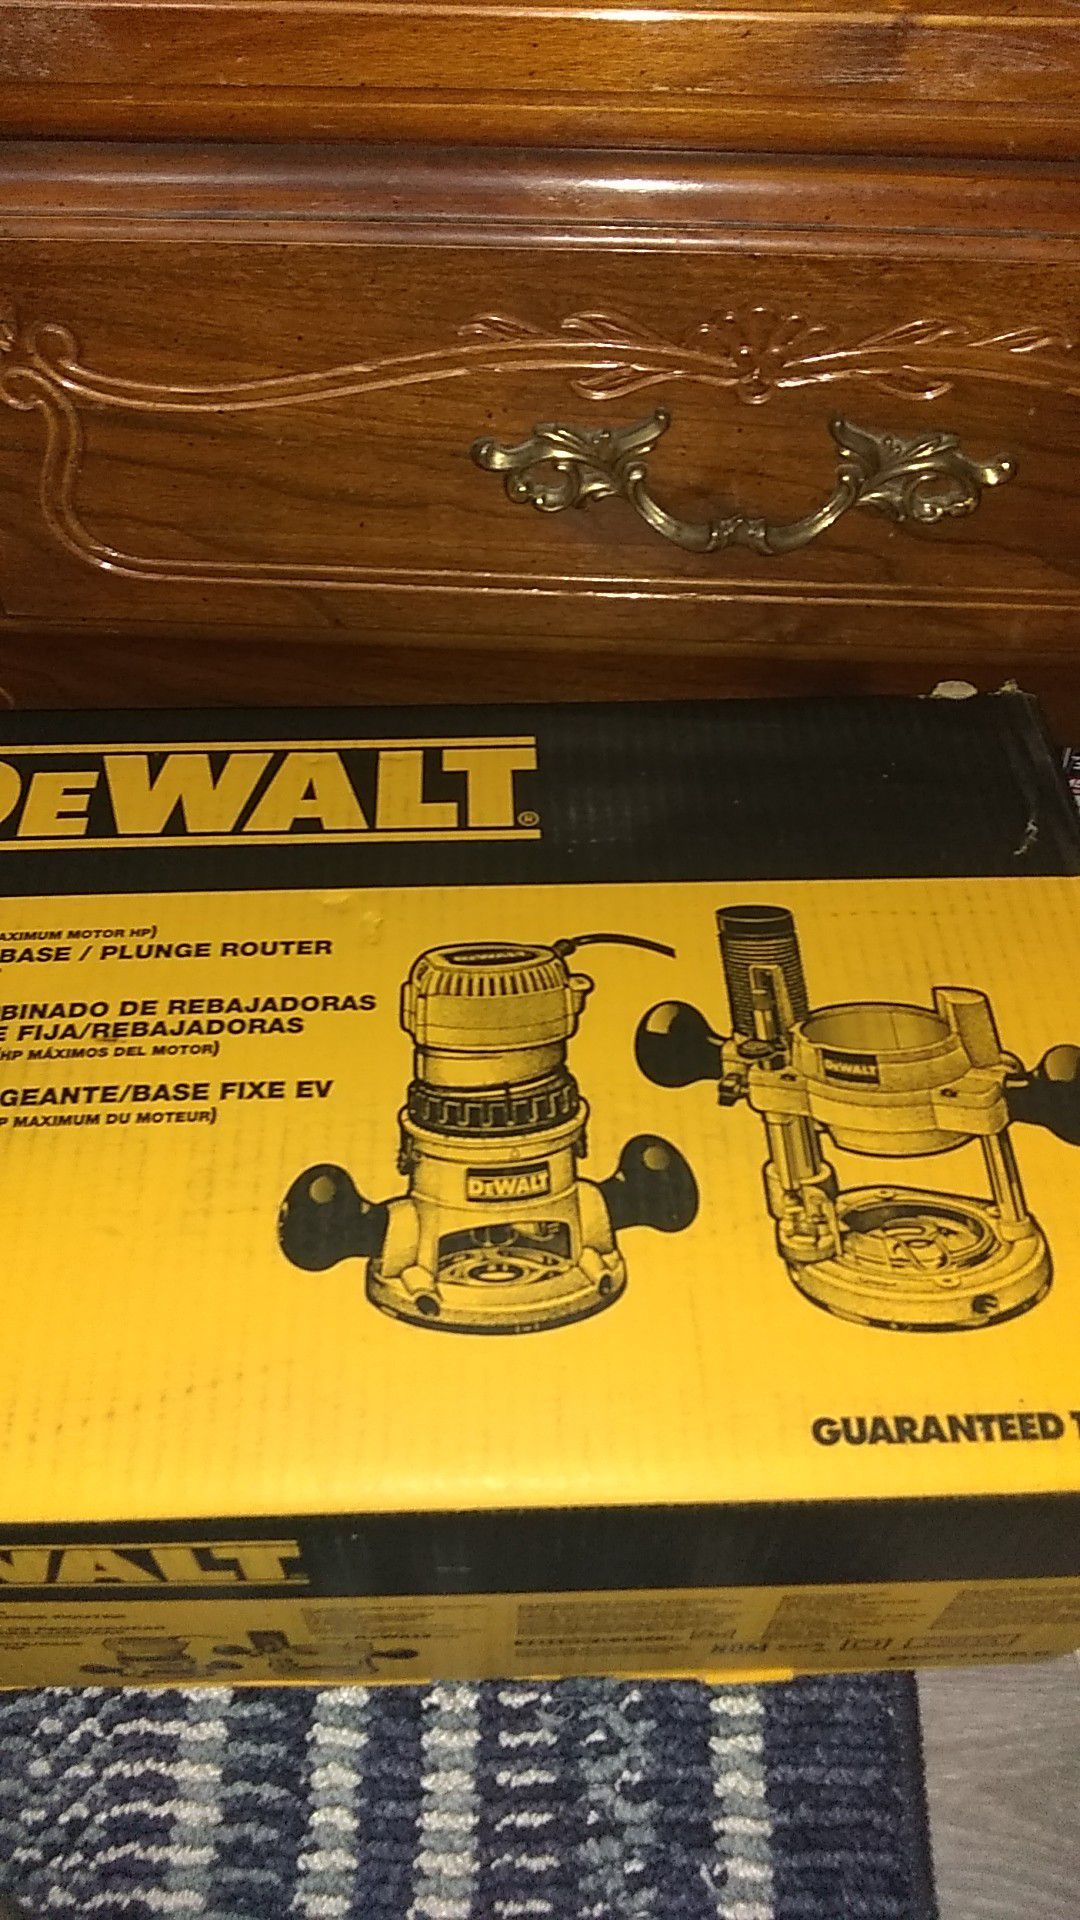 DeWalt power tools new in box